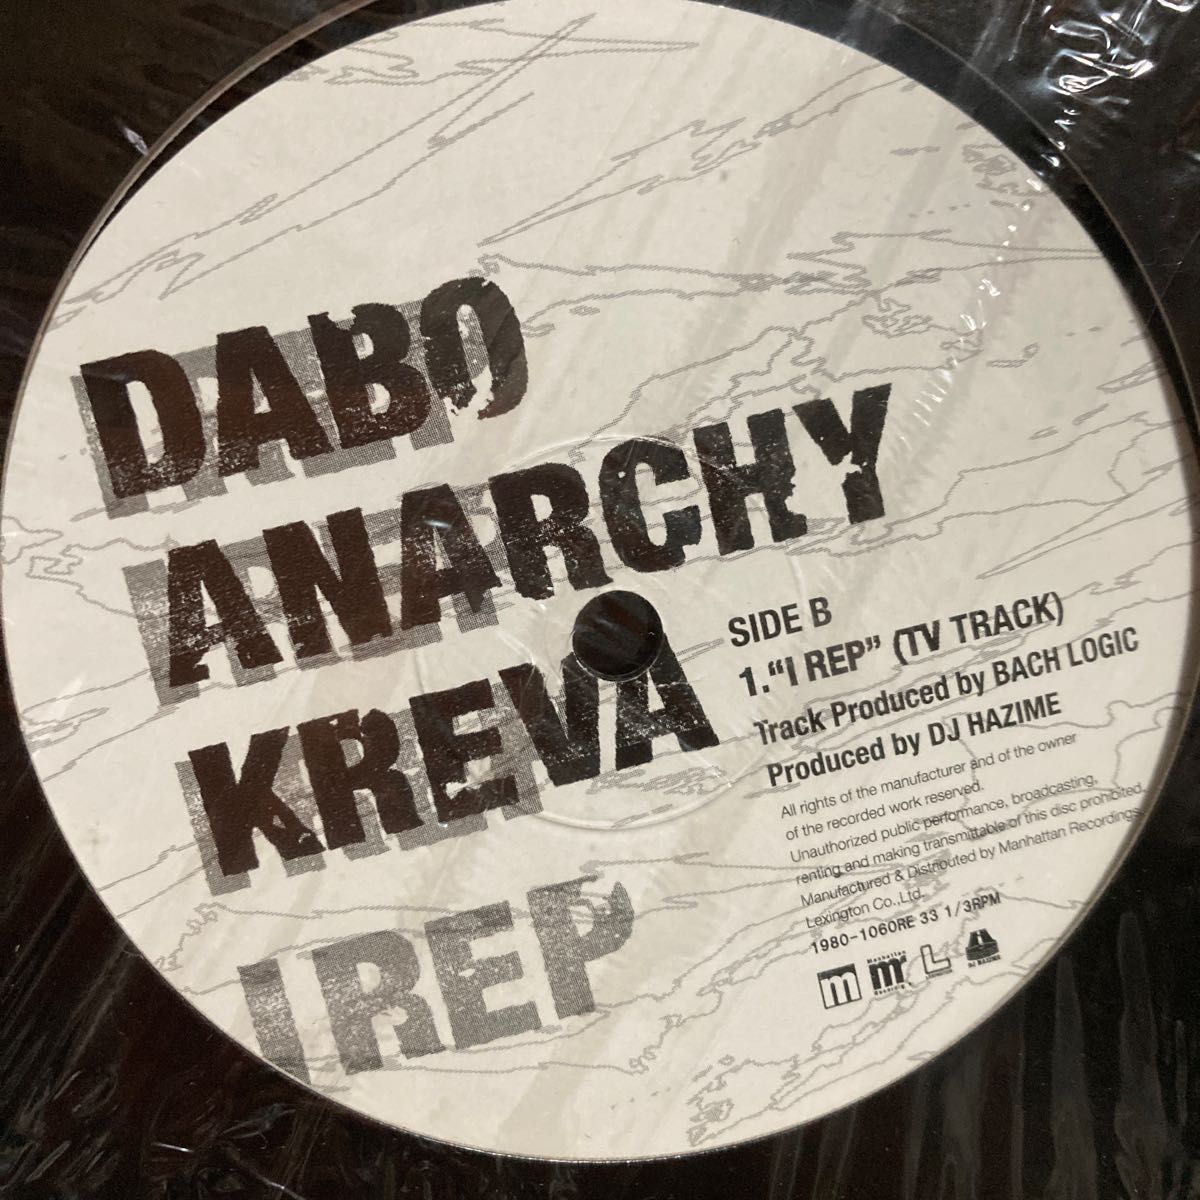 "I REP" DABO ANARCHY KREVA レア12インチ 美品 日本語ラップクラシック BACH LOGIC